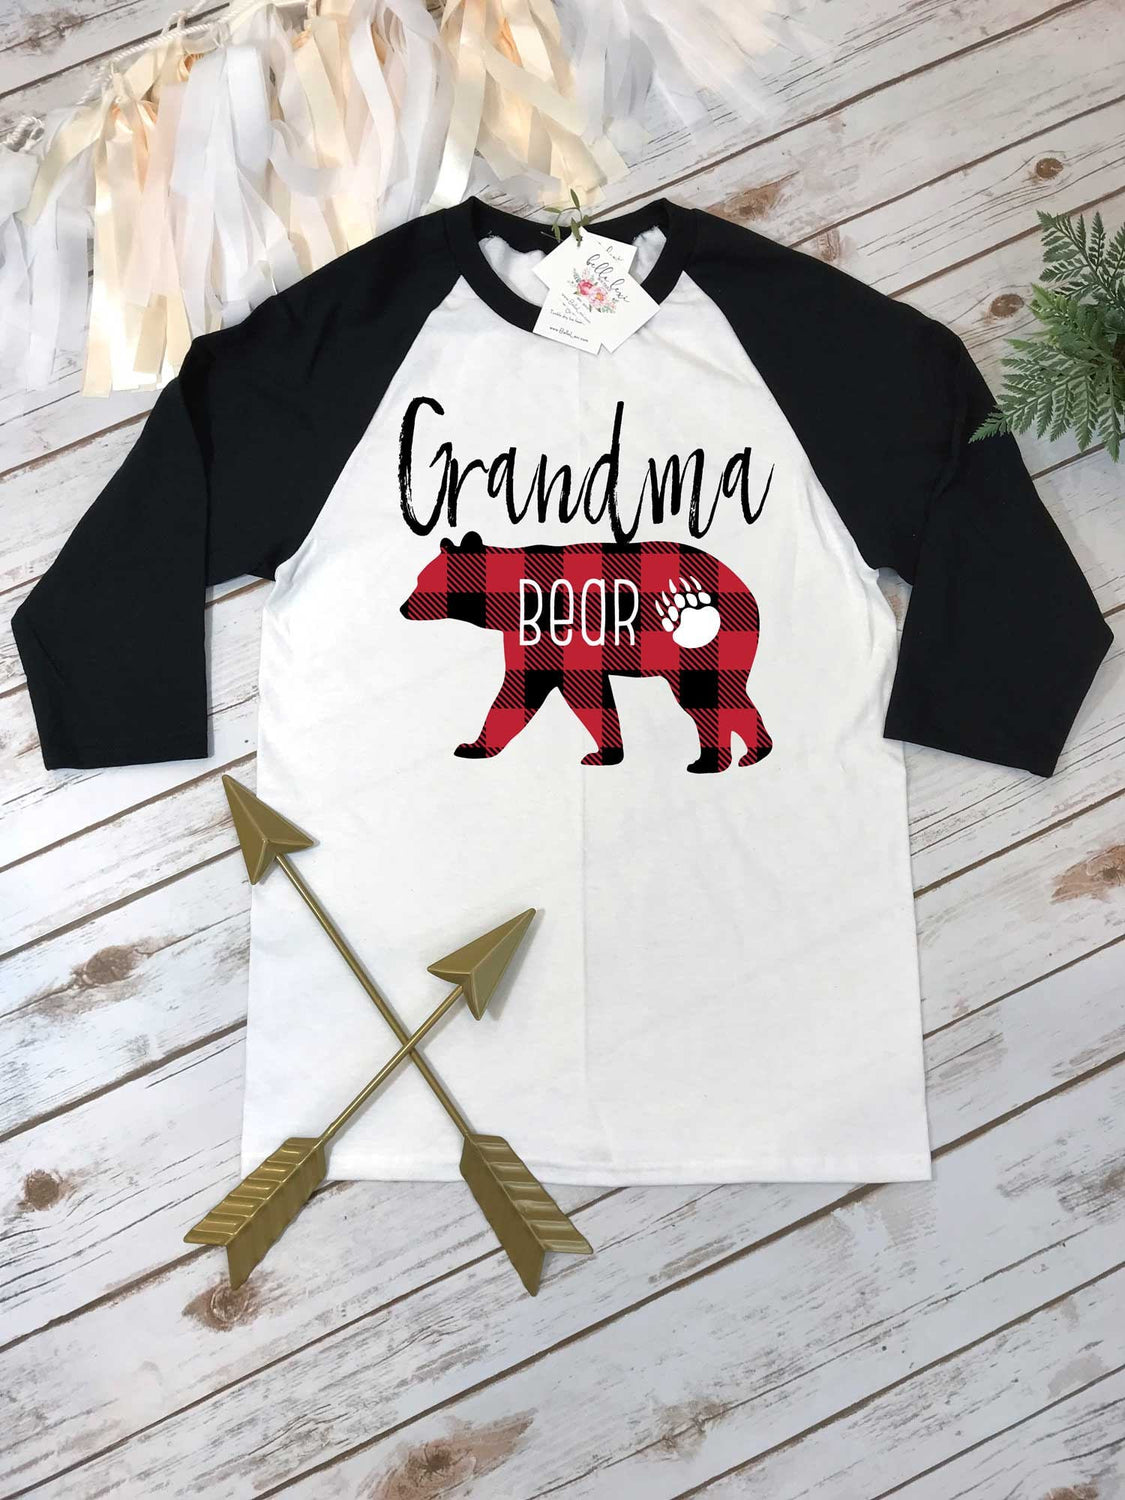 GRANDMA Bear Shirt, Mommy and Me shirts, Mommy and Me Outfits, Buffalo Plaid Shirt, Grandma Shirts, Family Outfits, Gift for Grandma, Grammy